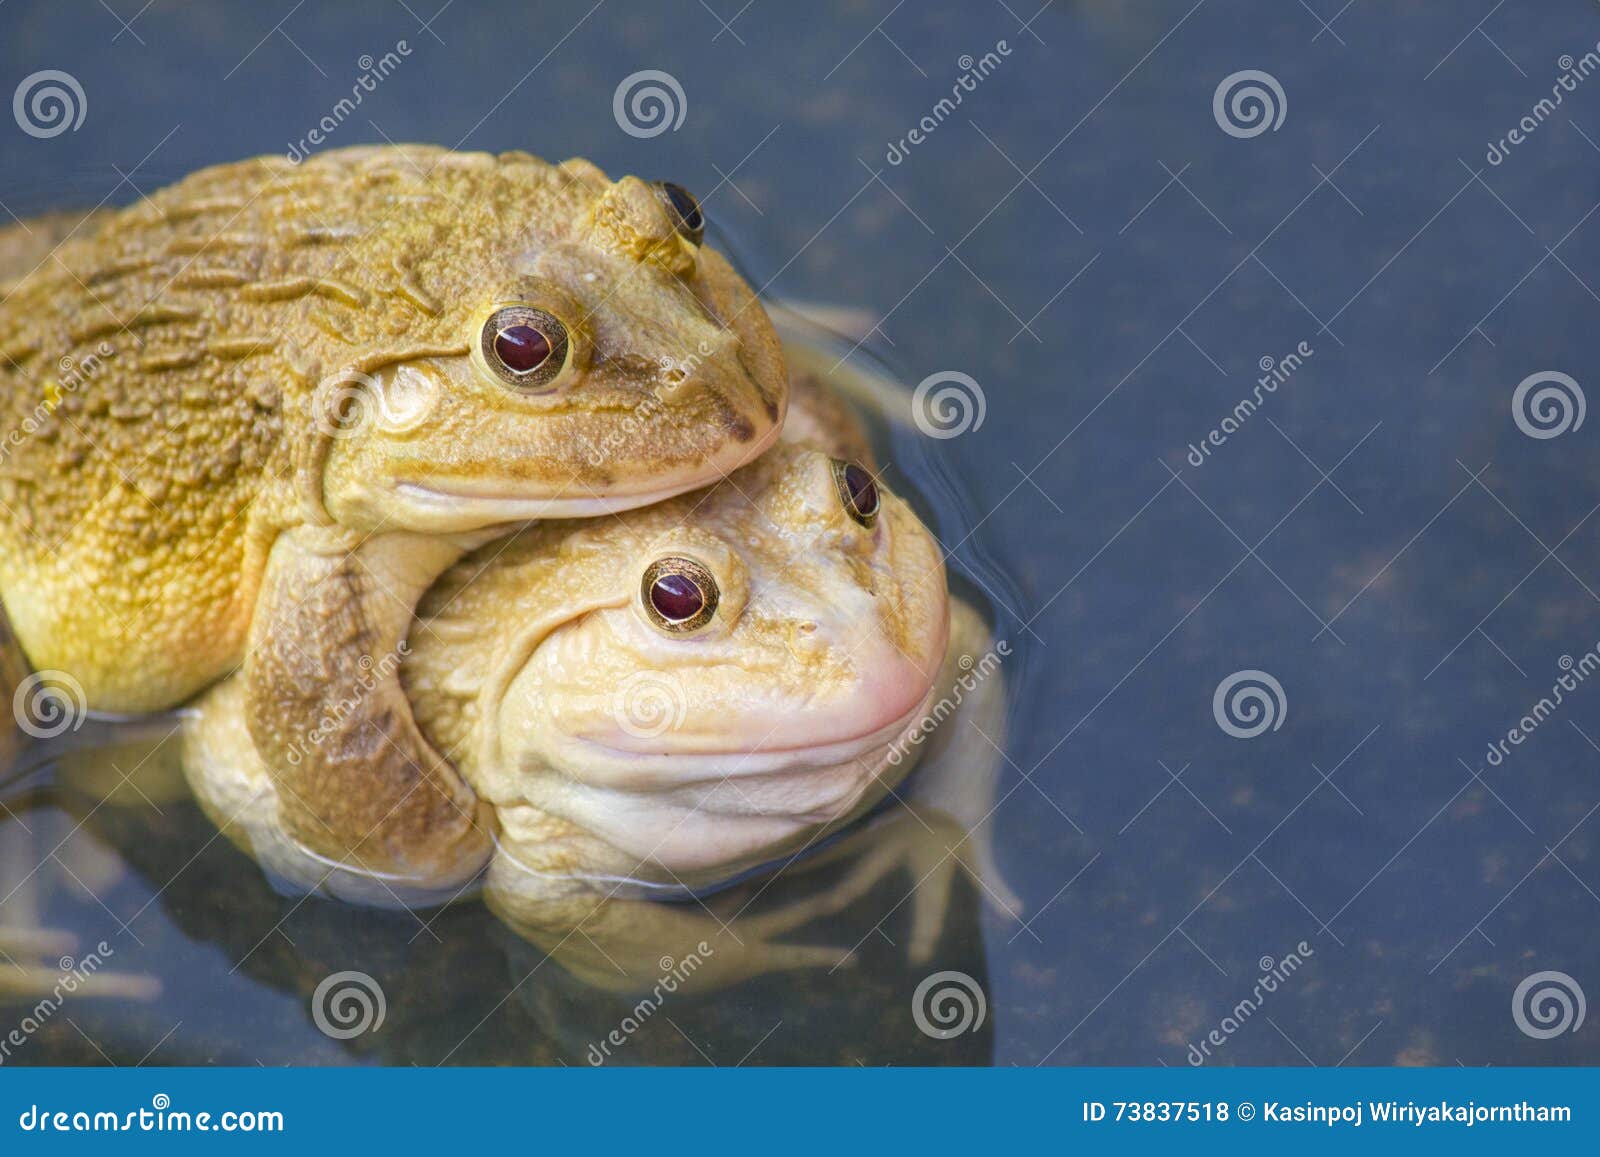 Elephant frog. Жаба гибрид. Лягушка в бассейне. Гибрид Жабы и лягушки. Жаба в бассейне.